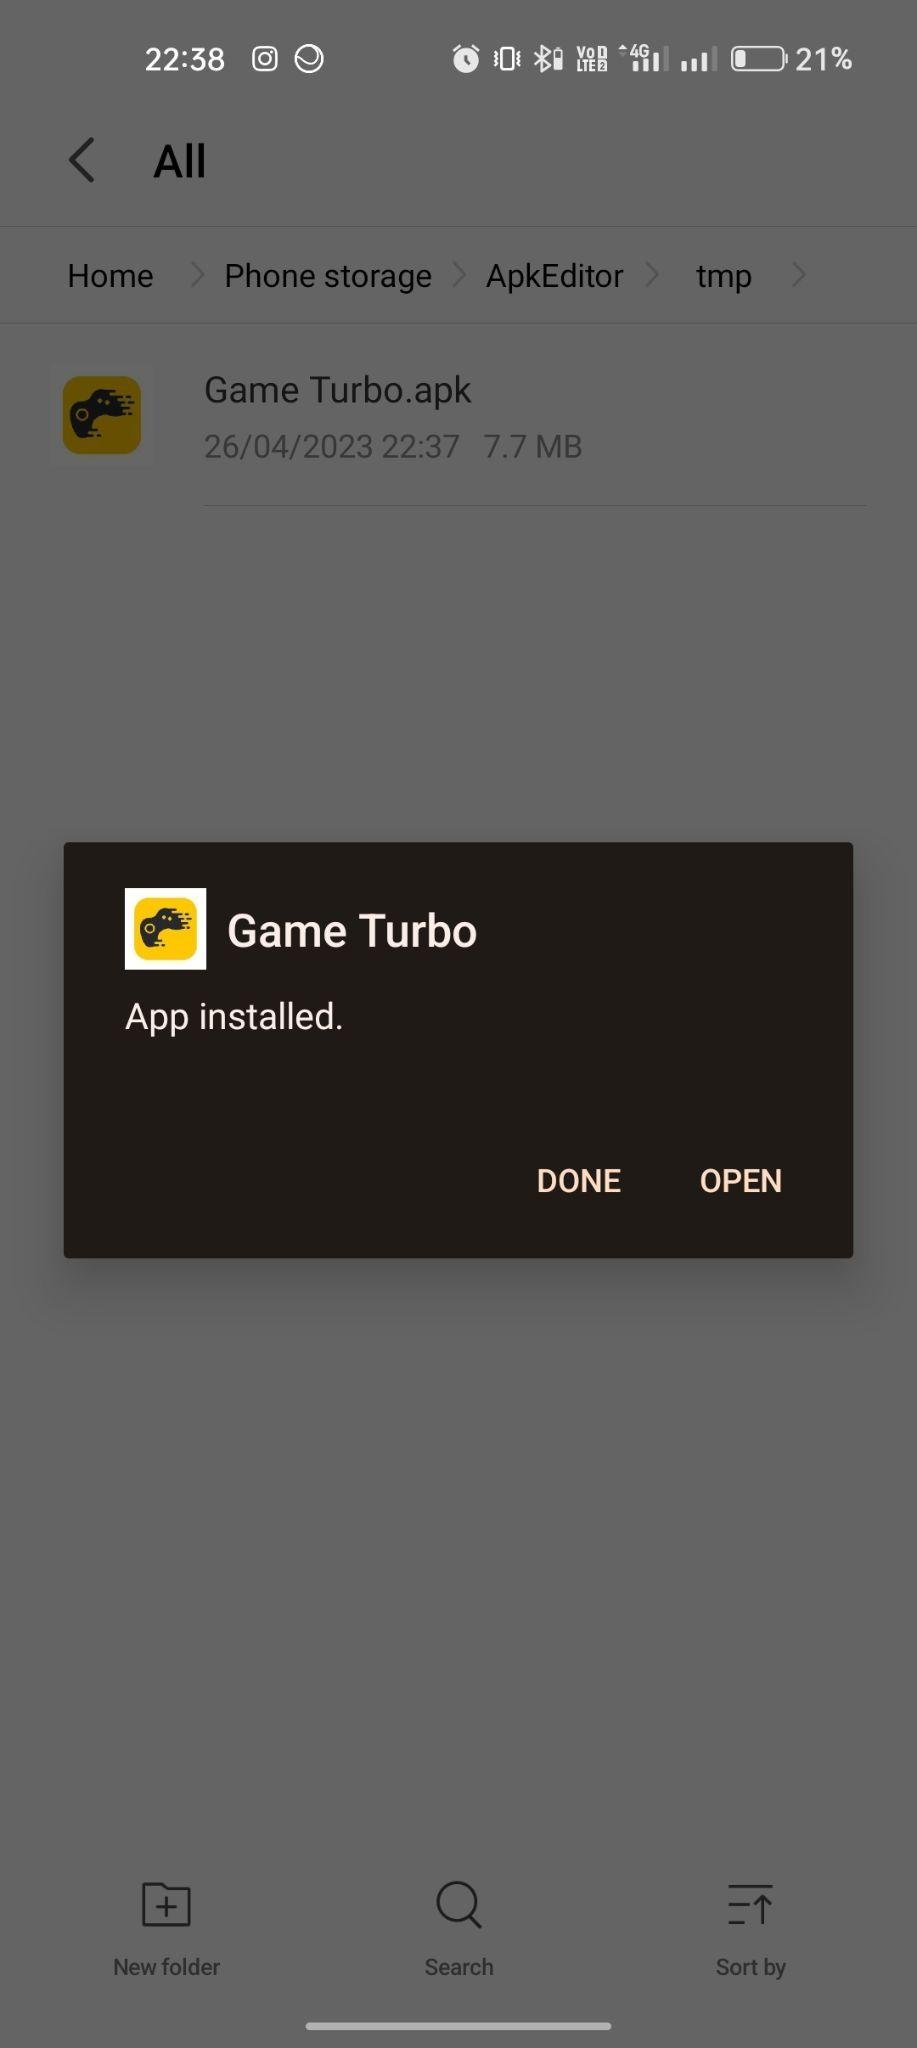 Game Turbo apk installed